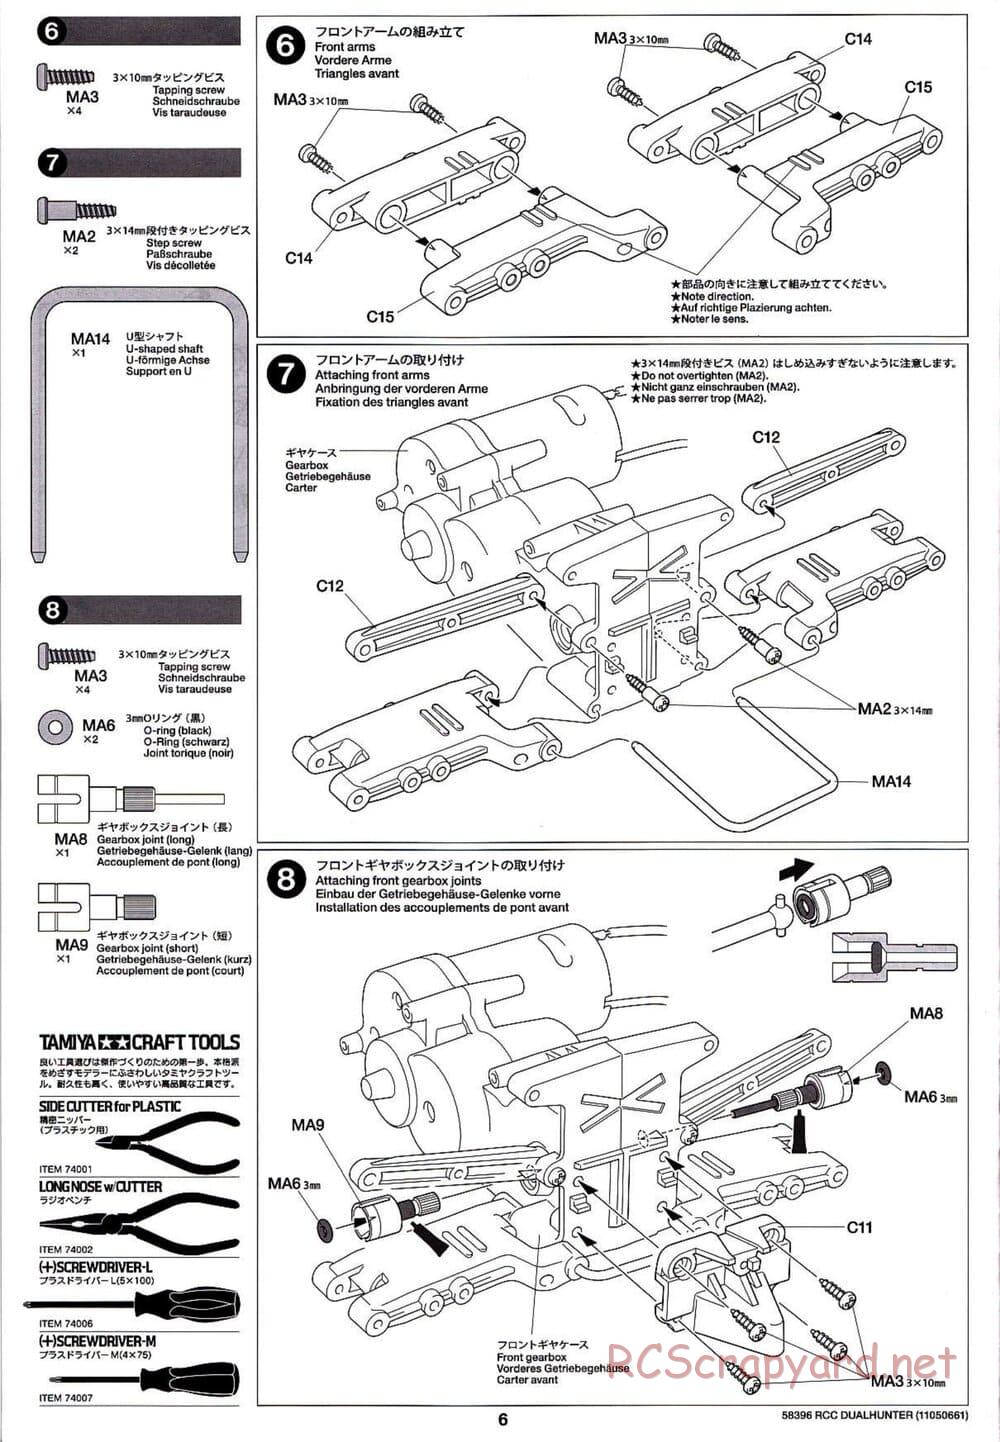 Tamiya - Dualhunter - WR-01 Chassis - Manual - Page 6